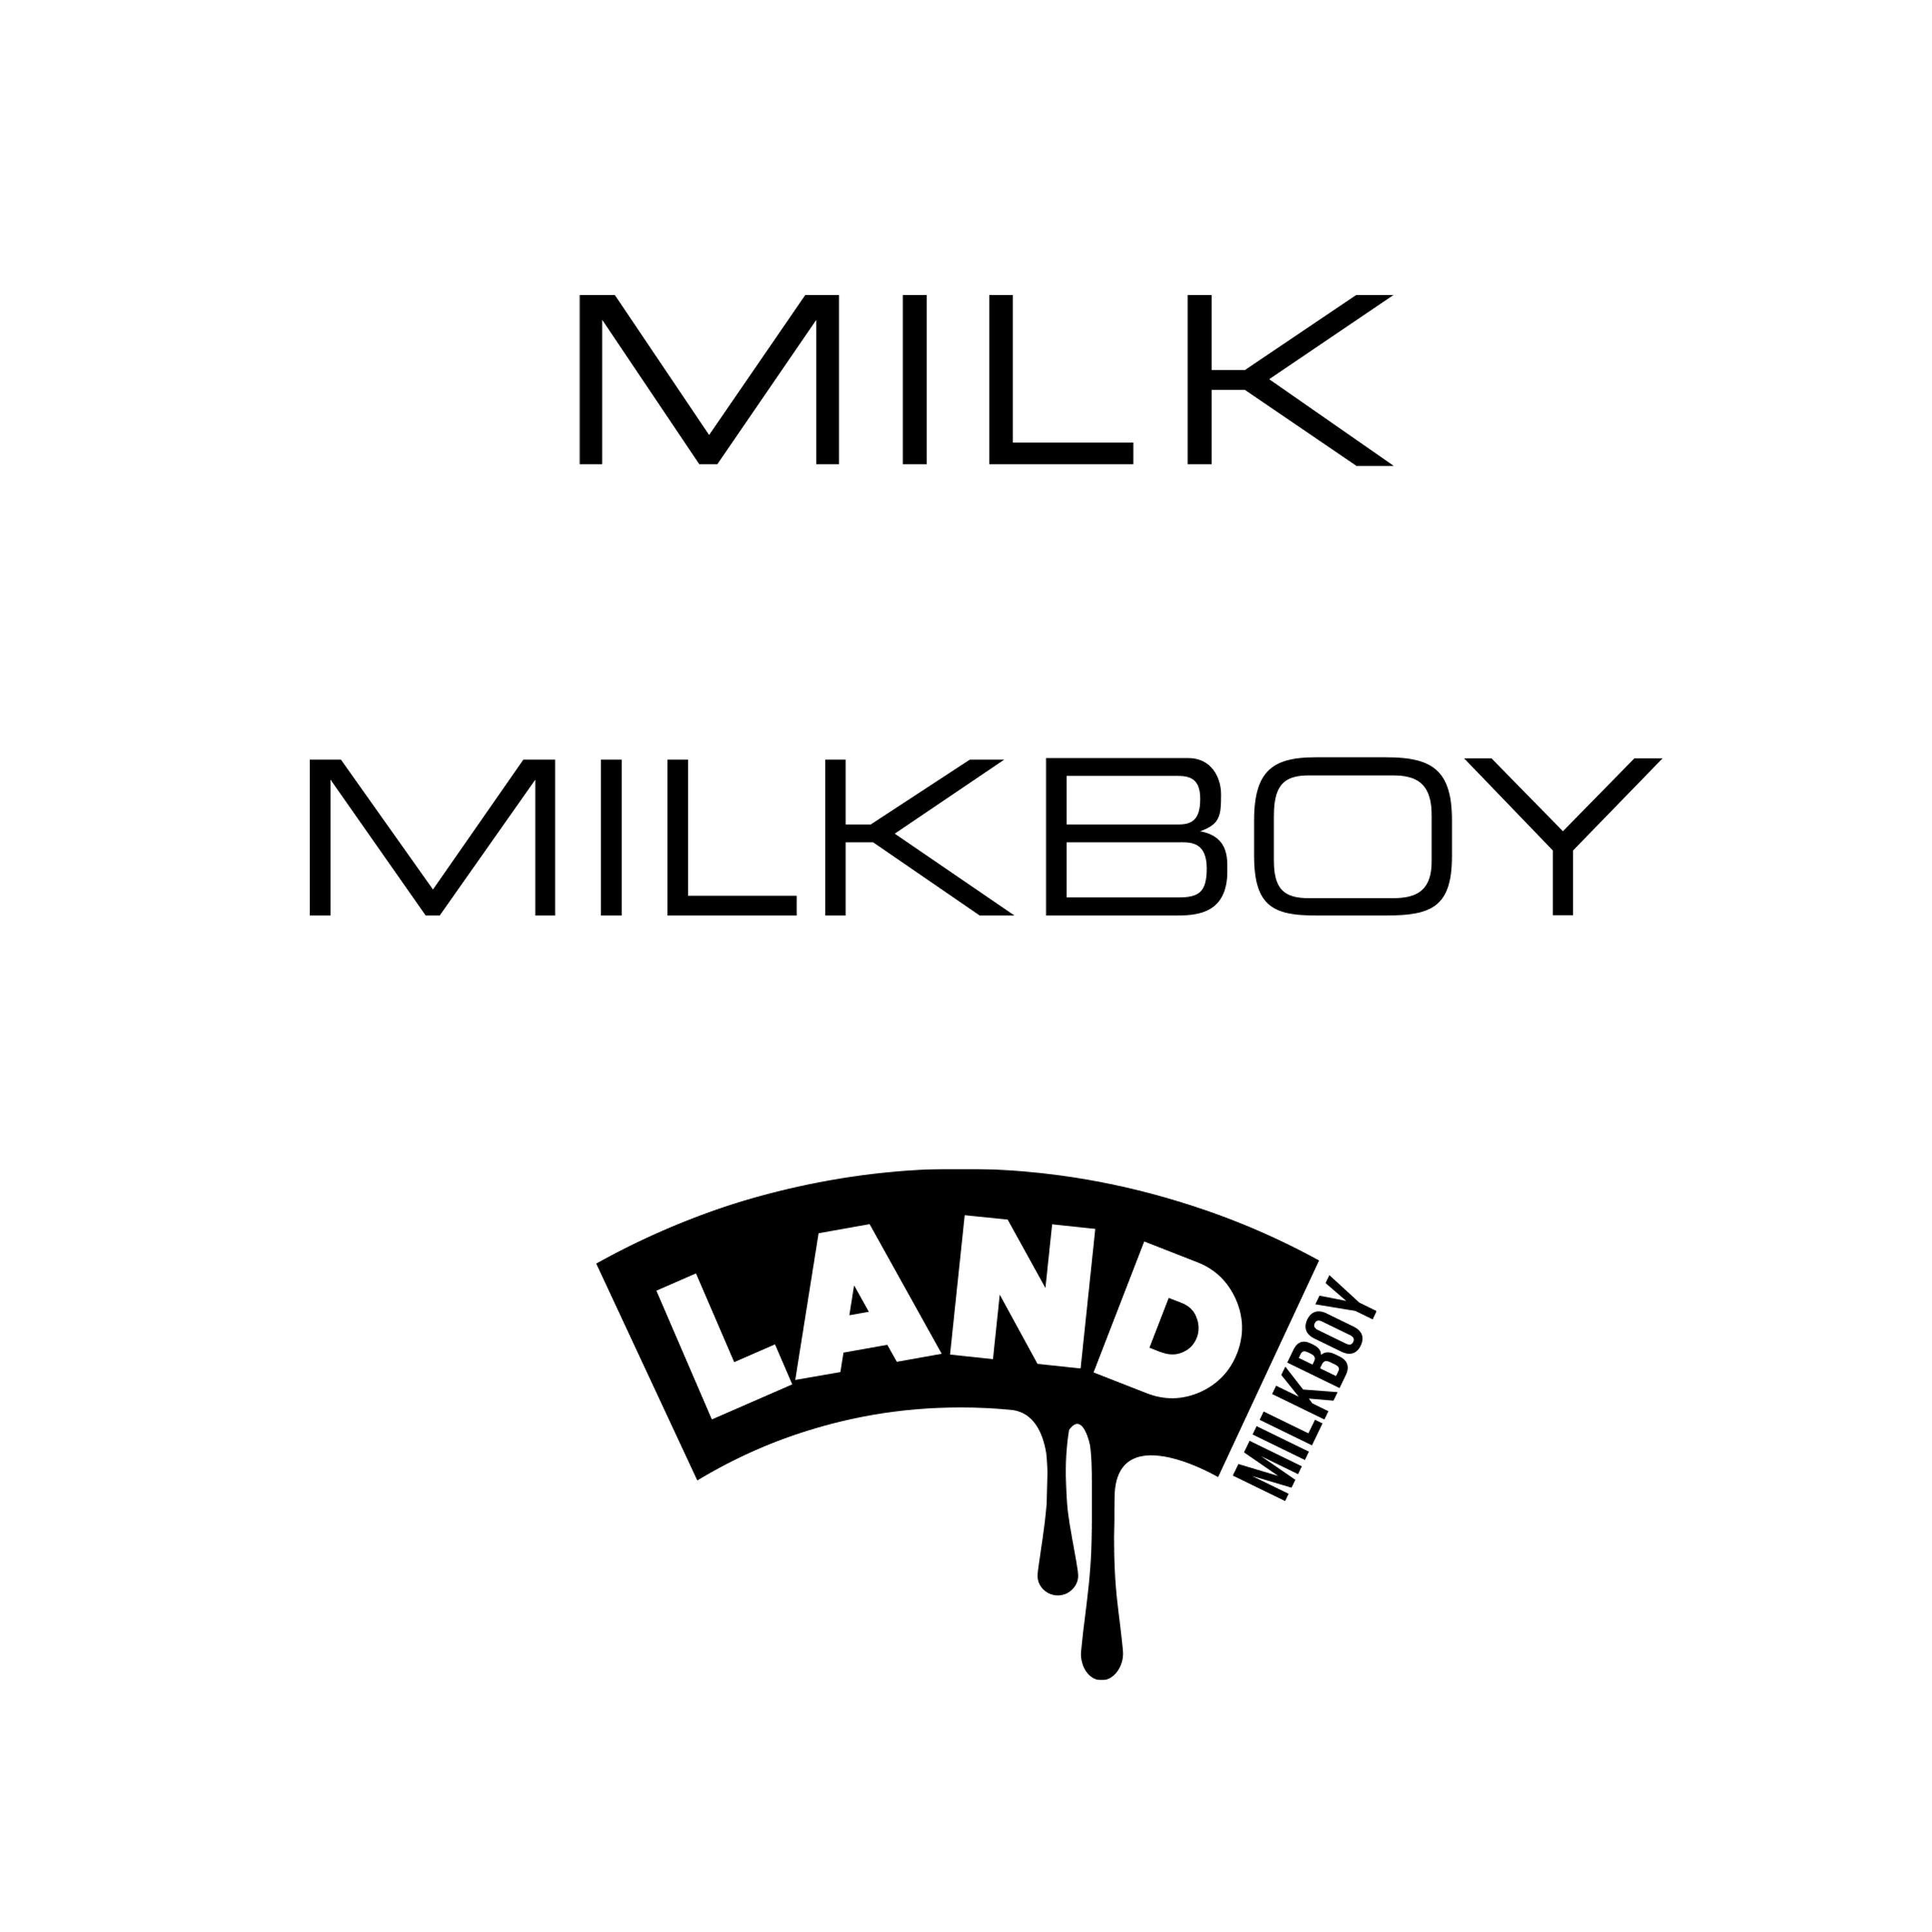 「MILK」「MILKBOY」「LAND by MILKBOY」のOFFICIAL ONLINE SHOPがリニューアルオープン！4月21日